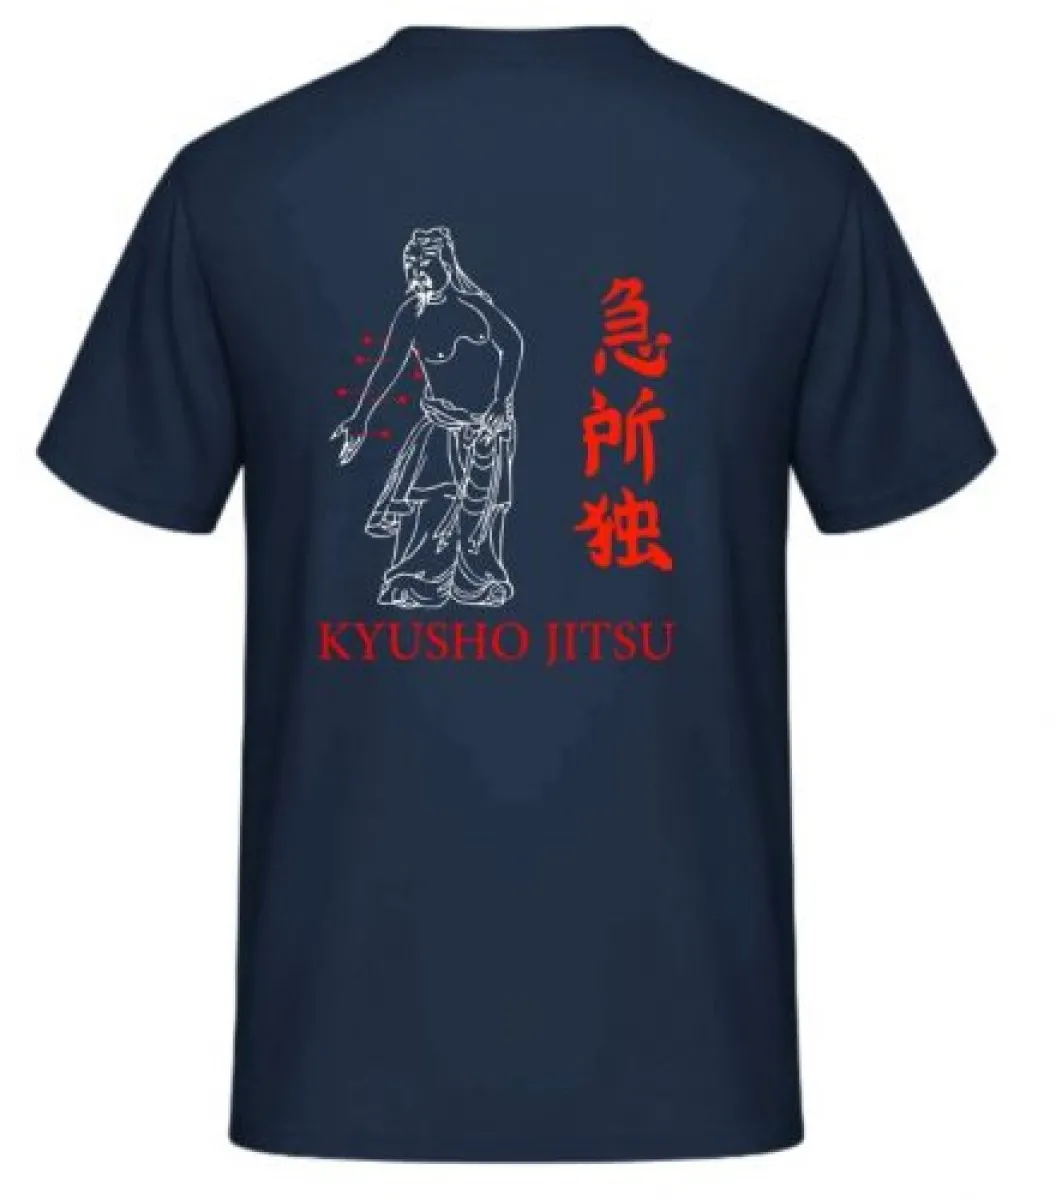 T-shirt bleu foncé avec impression Kyusho